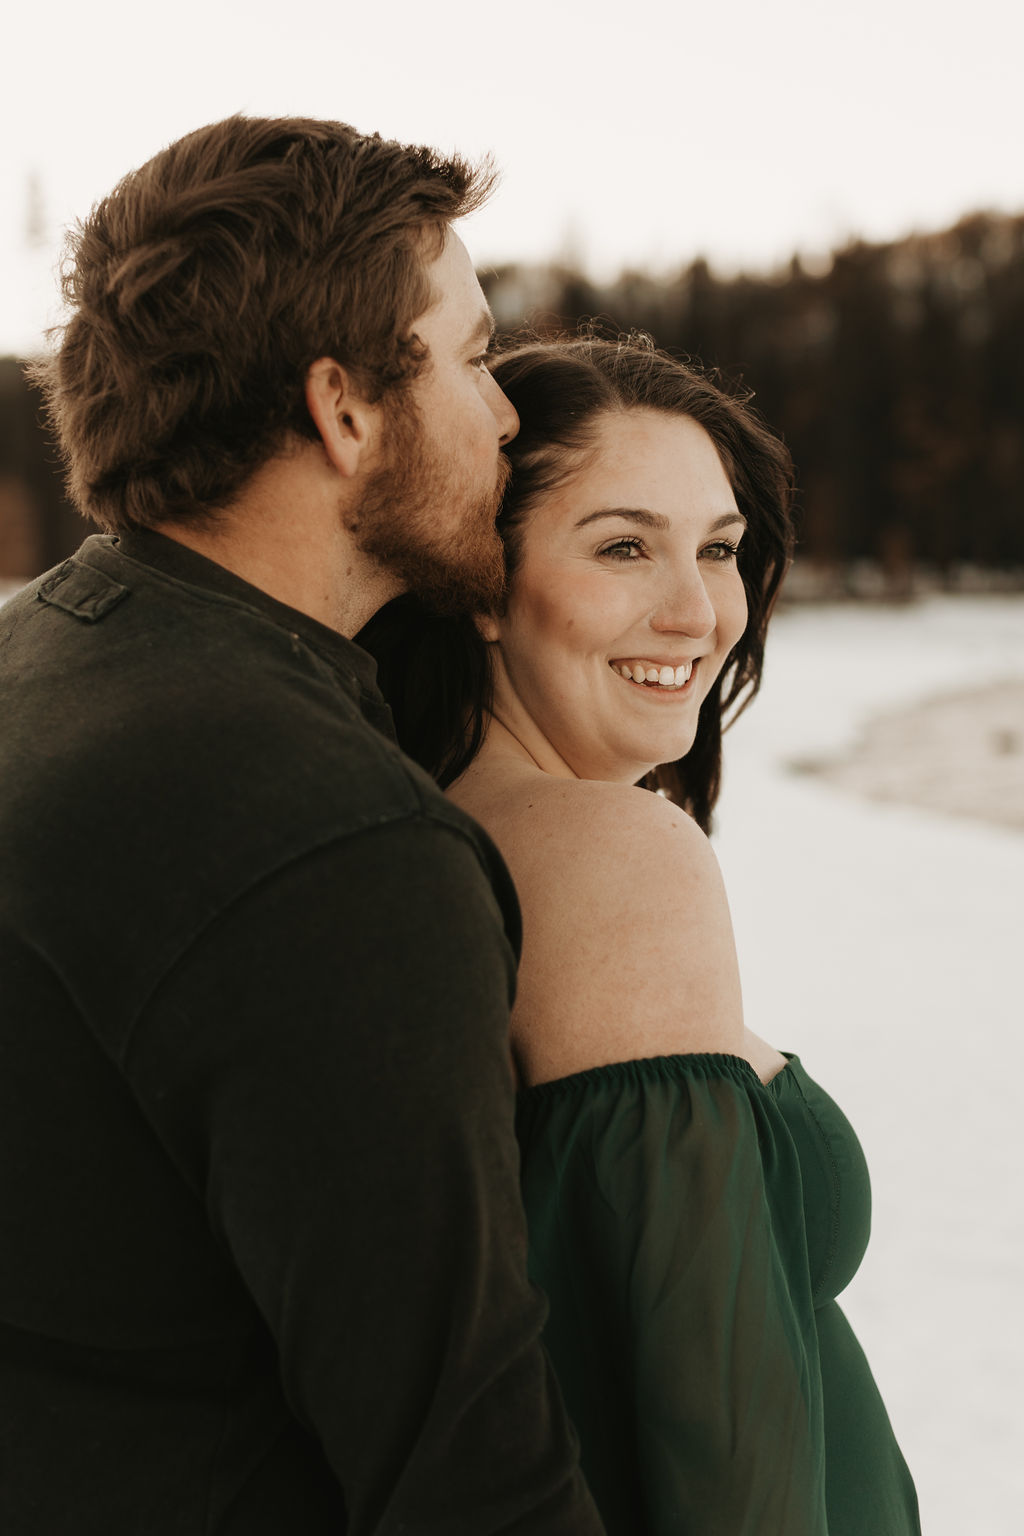 Snowy Winter Engagement Photos | Antonia & Brian